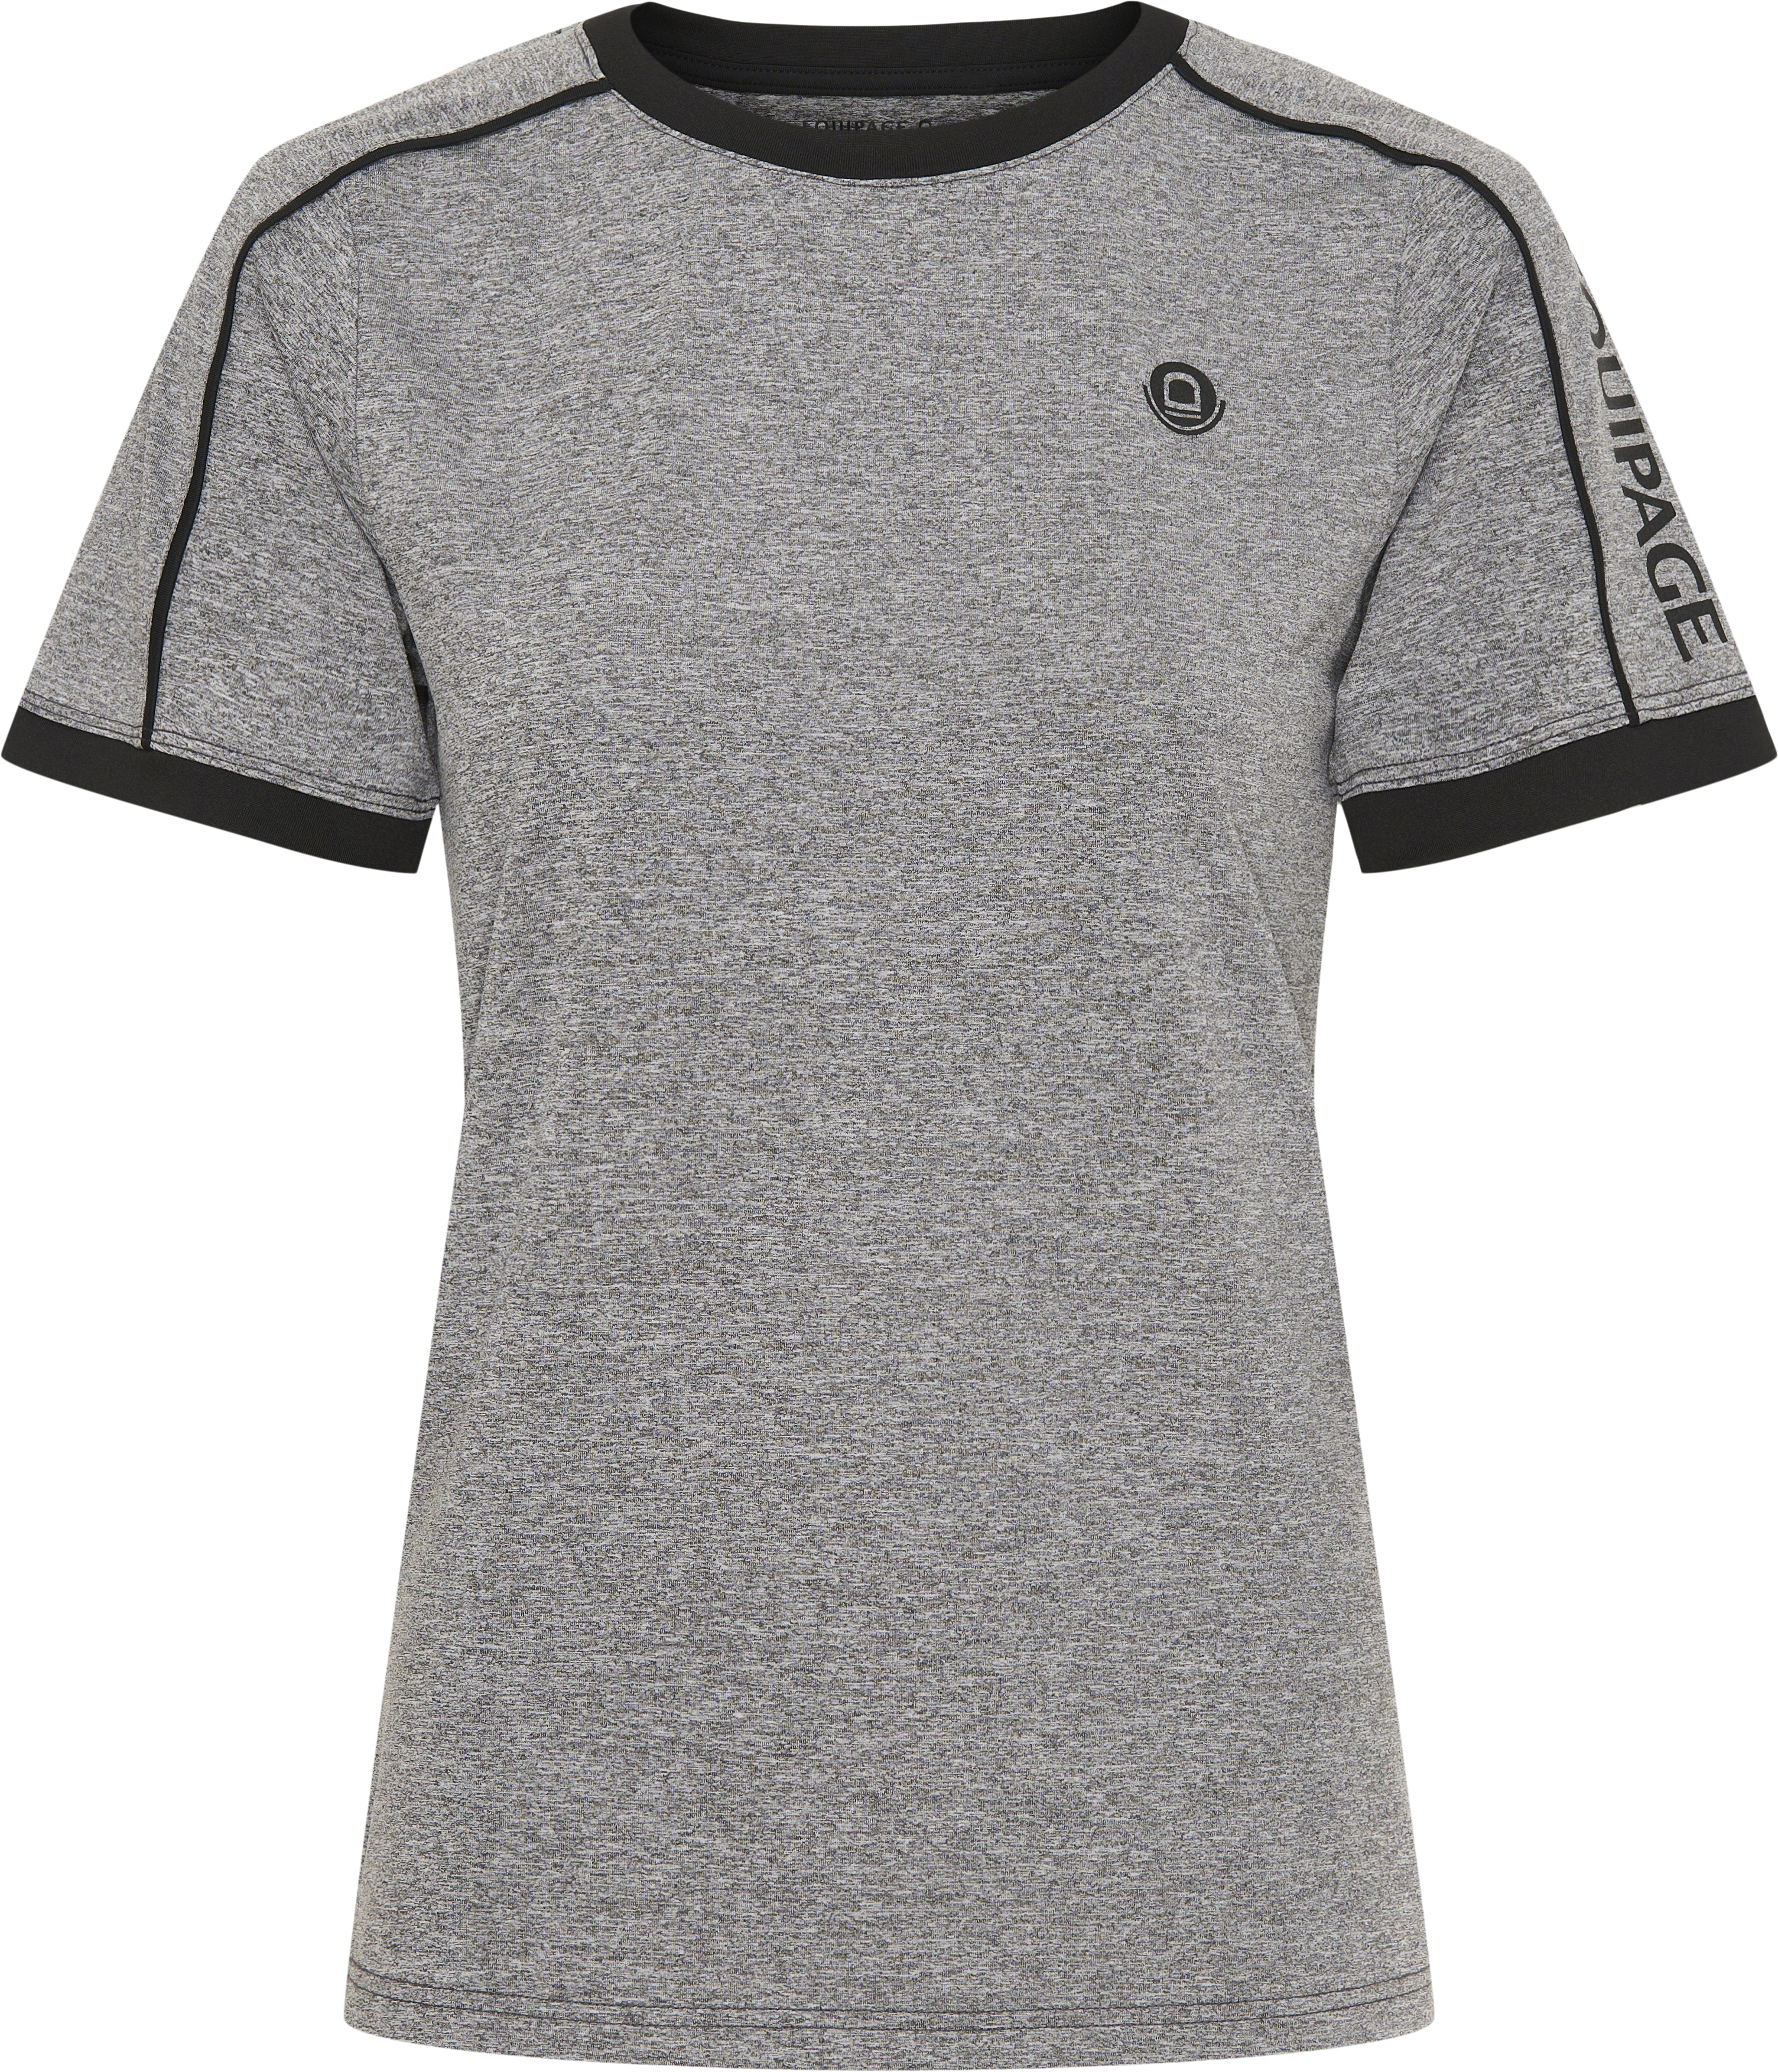 Equipage Melissa T-shirt - Grey Melange (S)